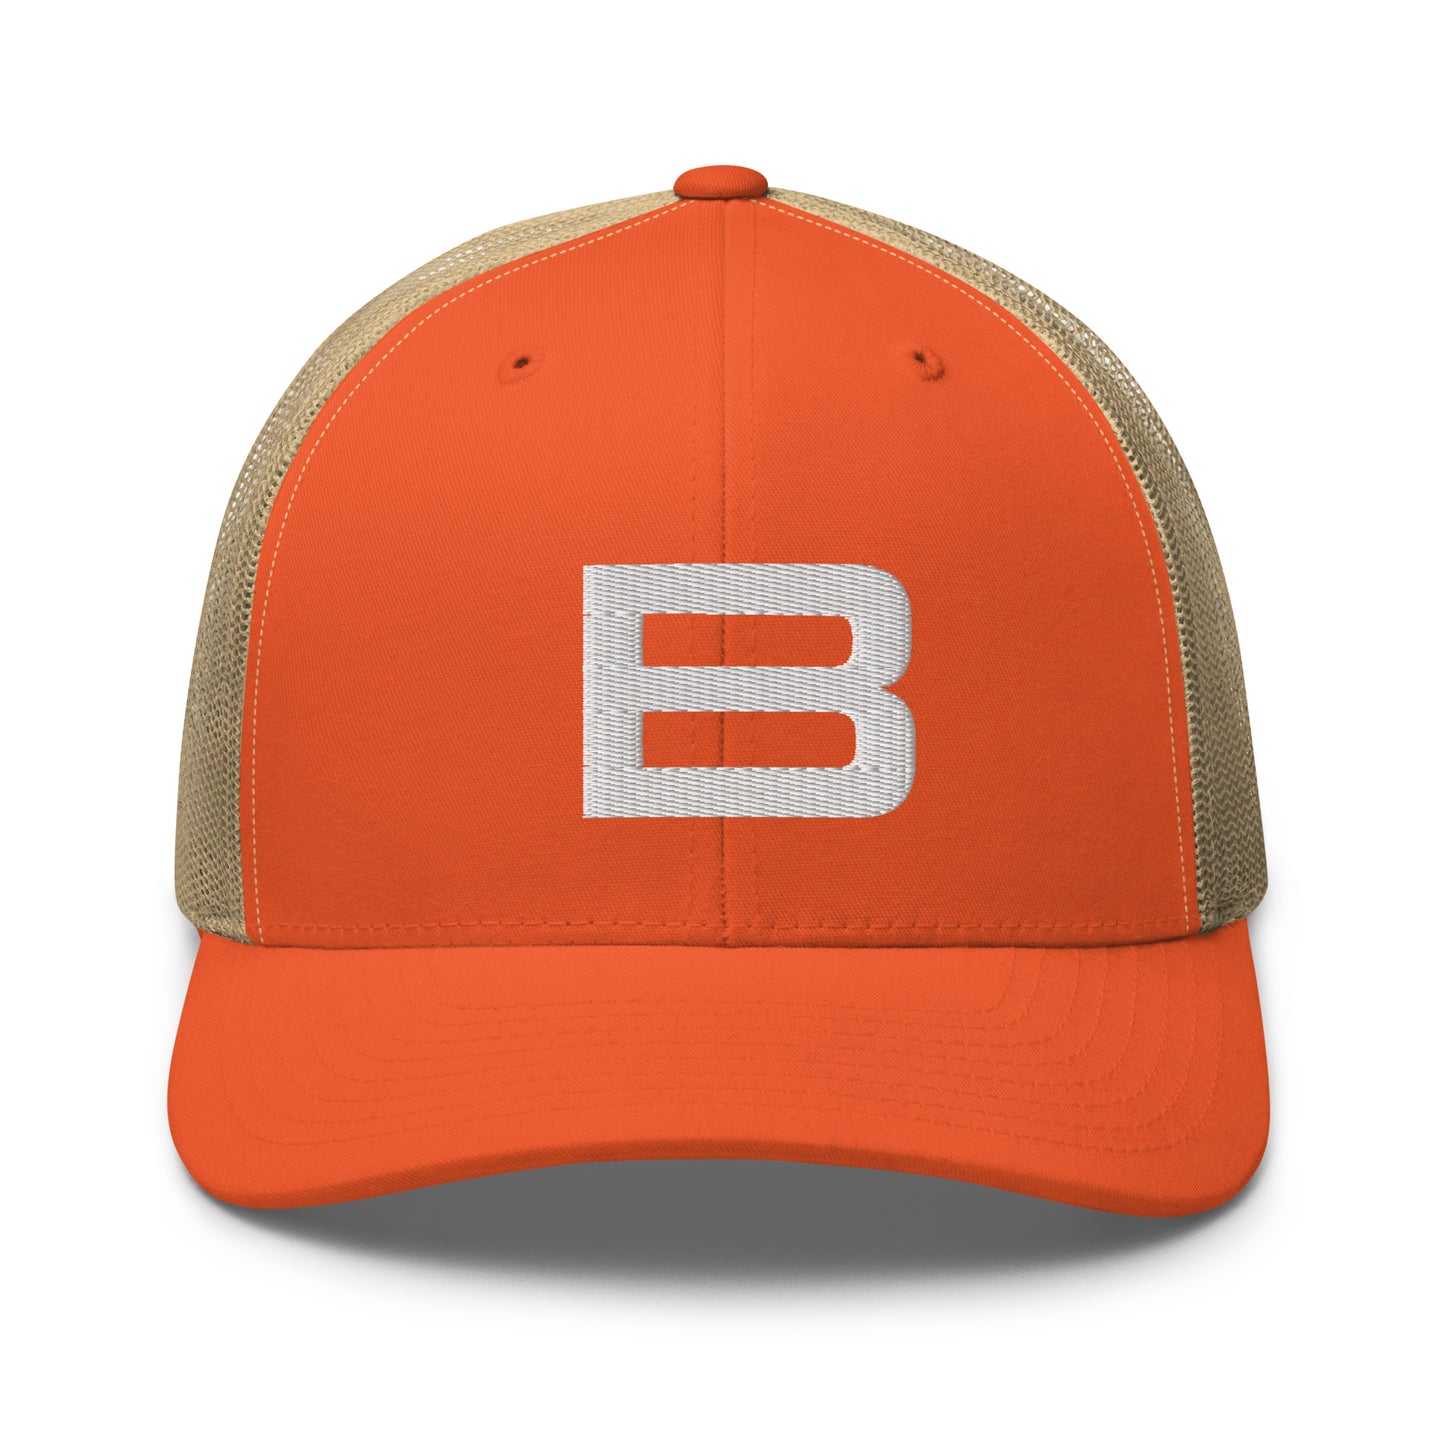 BALA "B" Trucker Hat